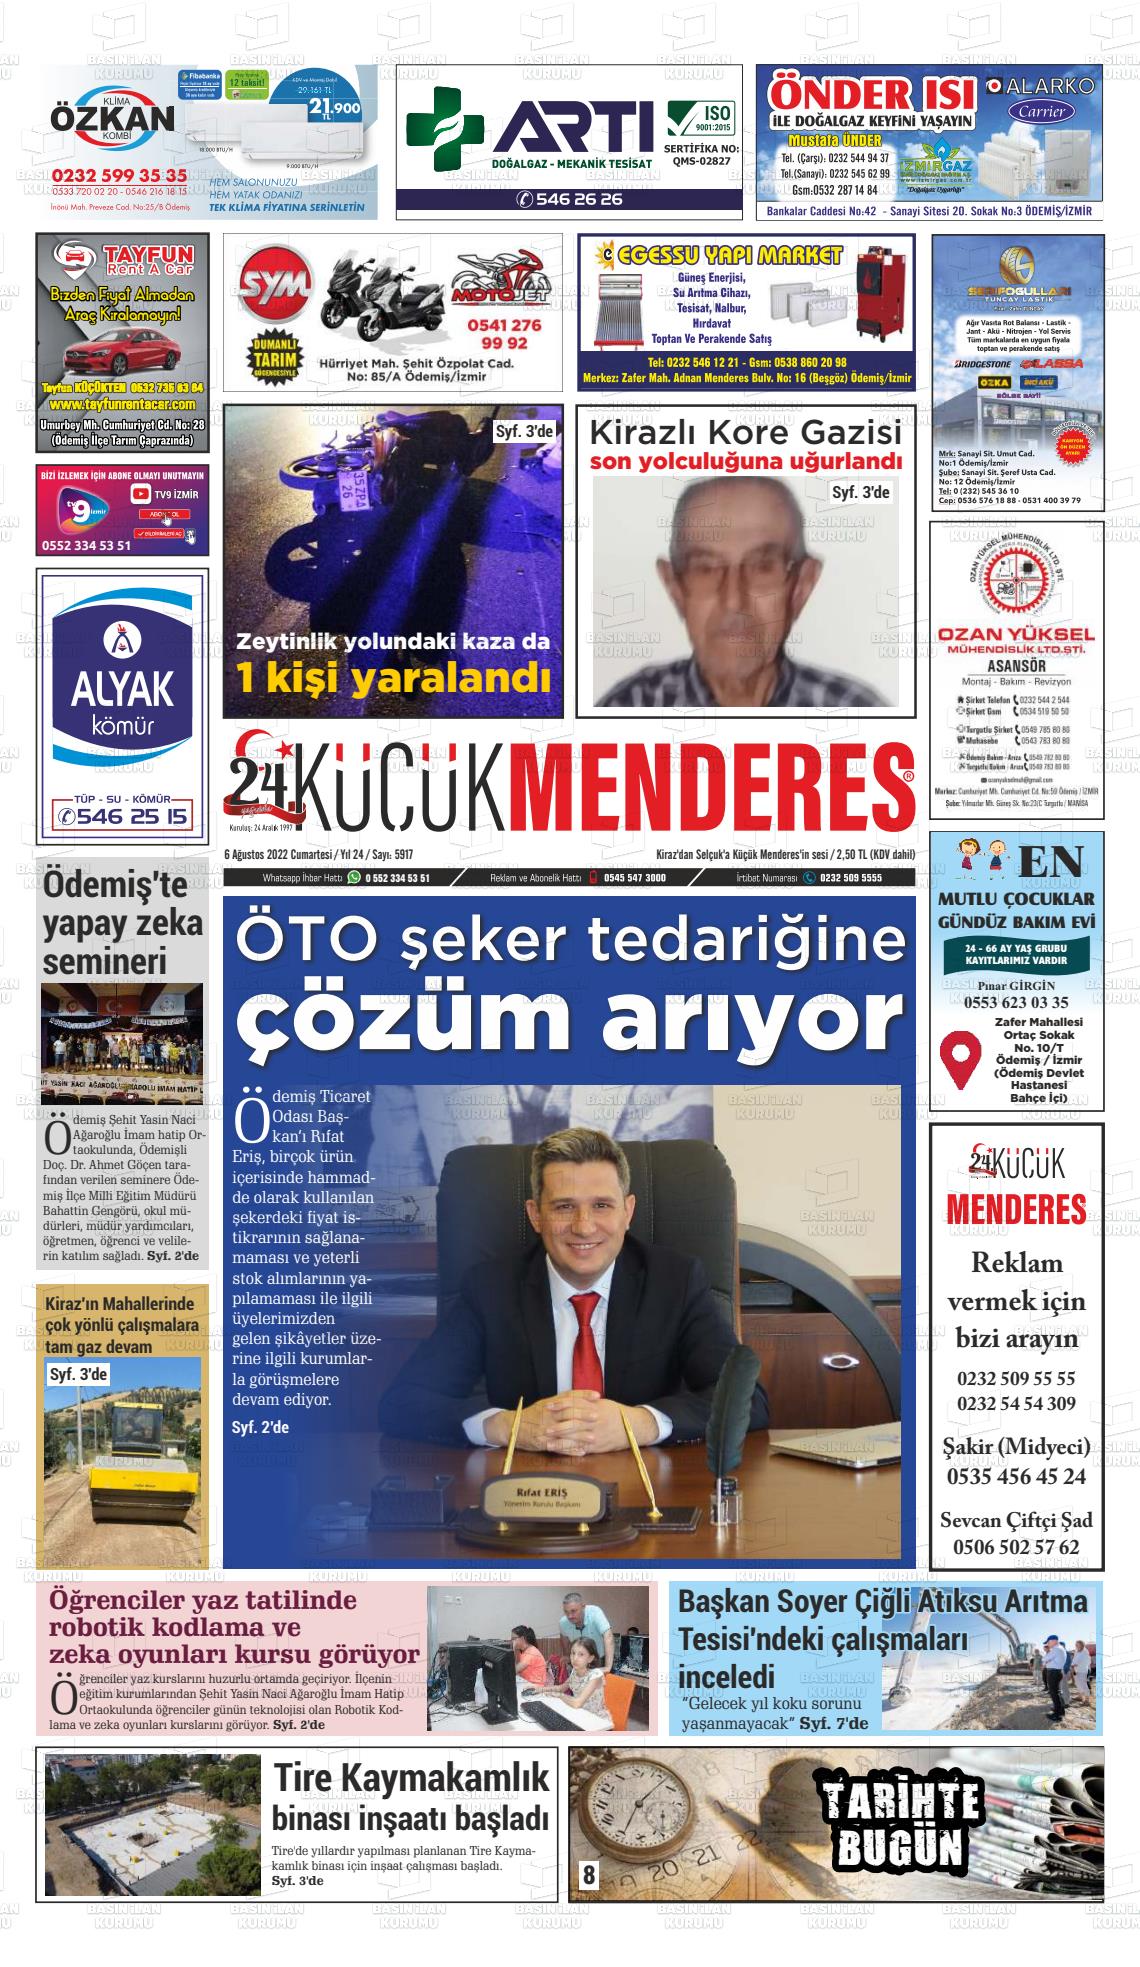 06 Ağustos 2022 Küçük Menderes Gazete Manşeti